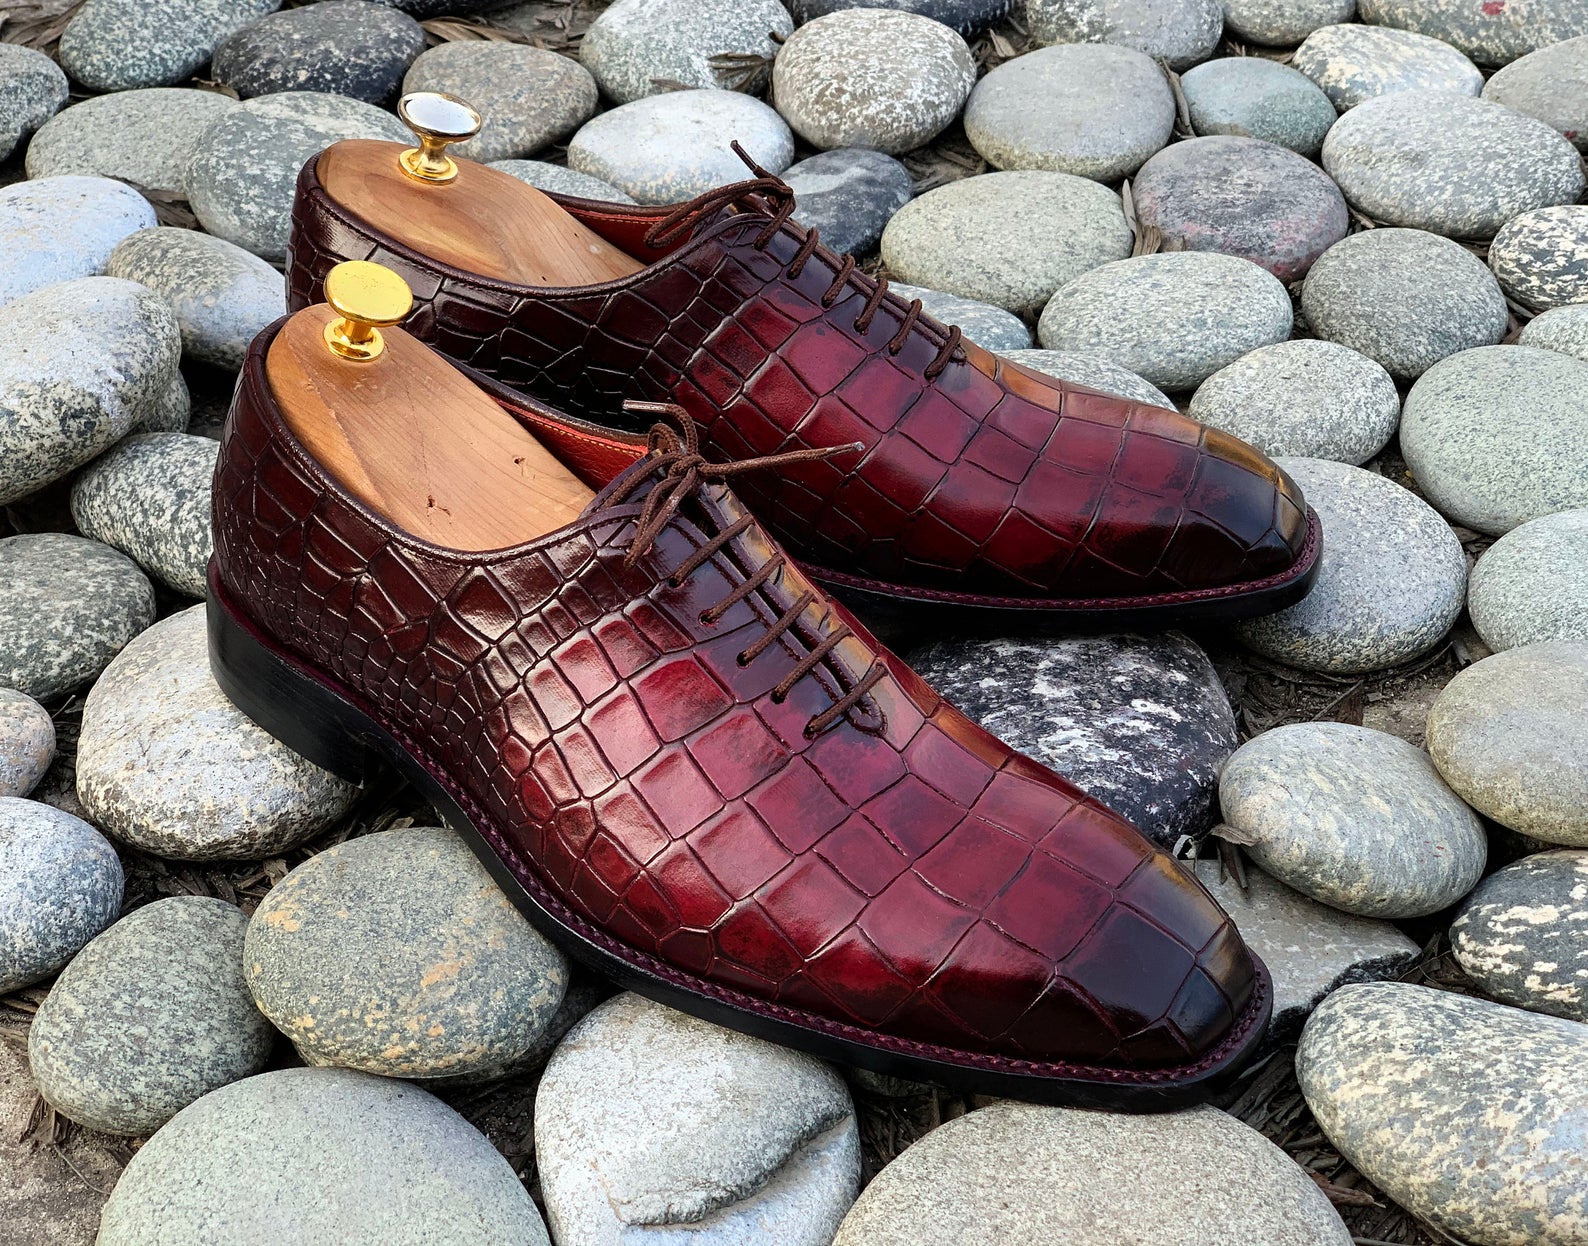 burgundy dress shoes